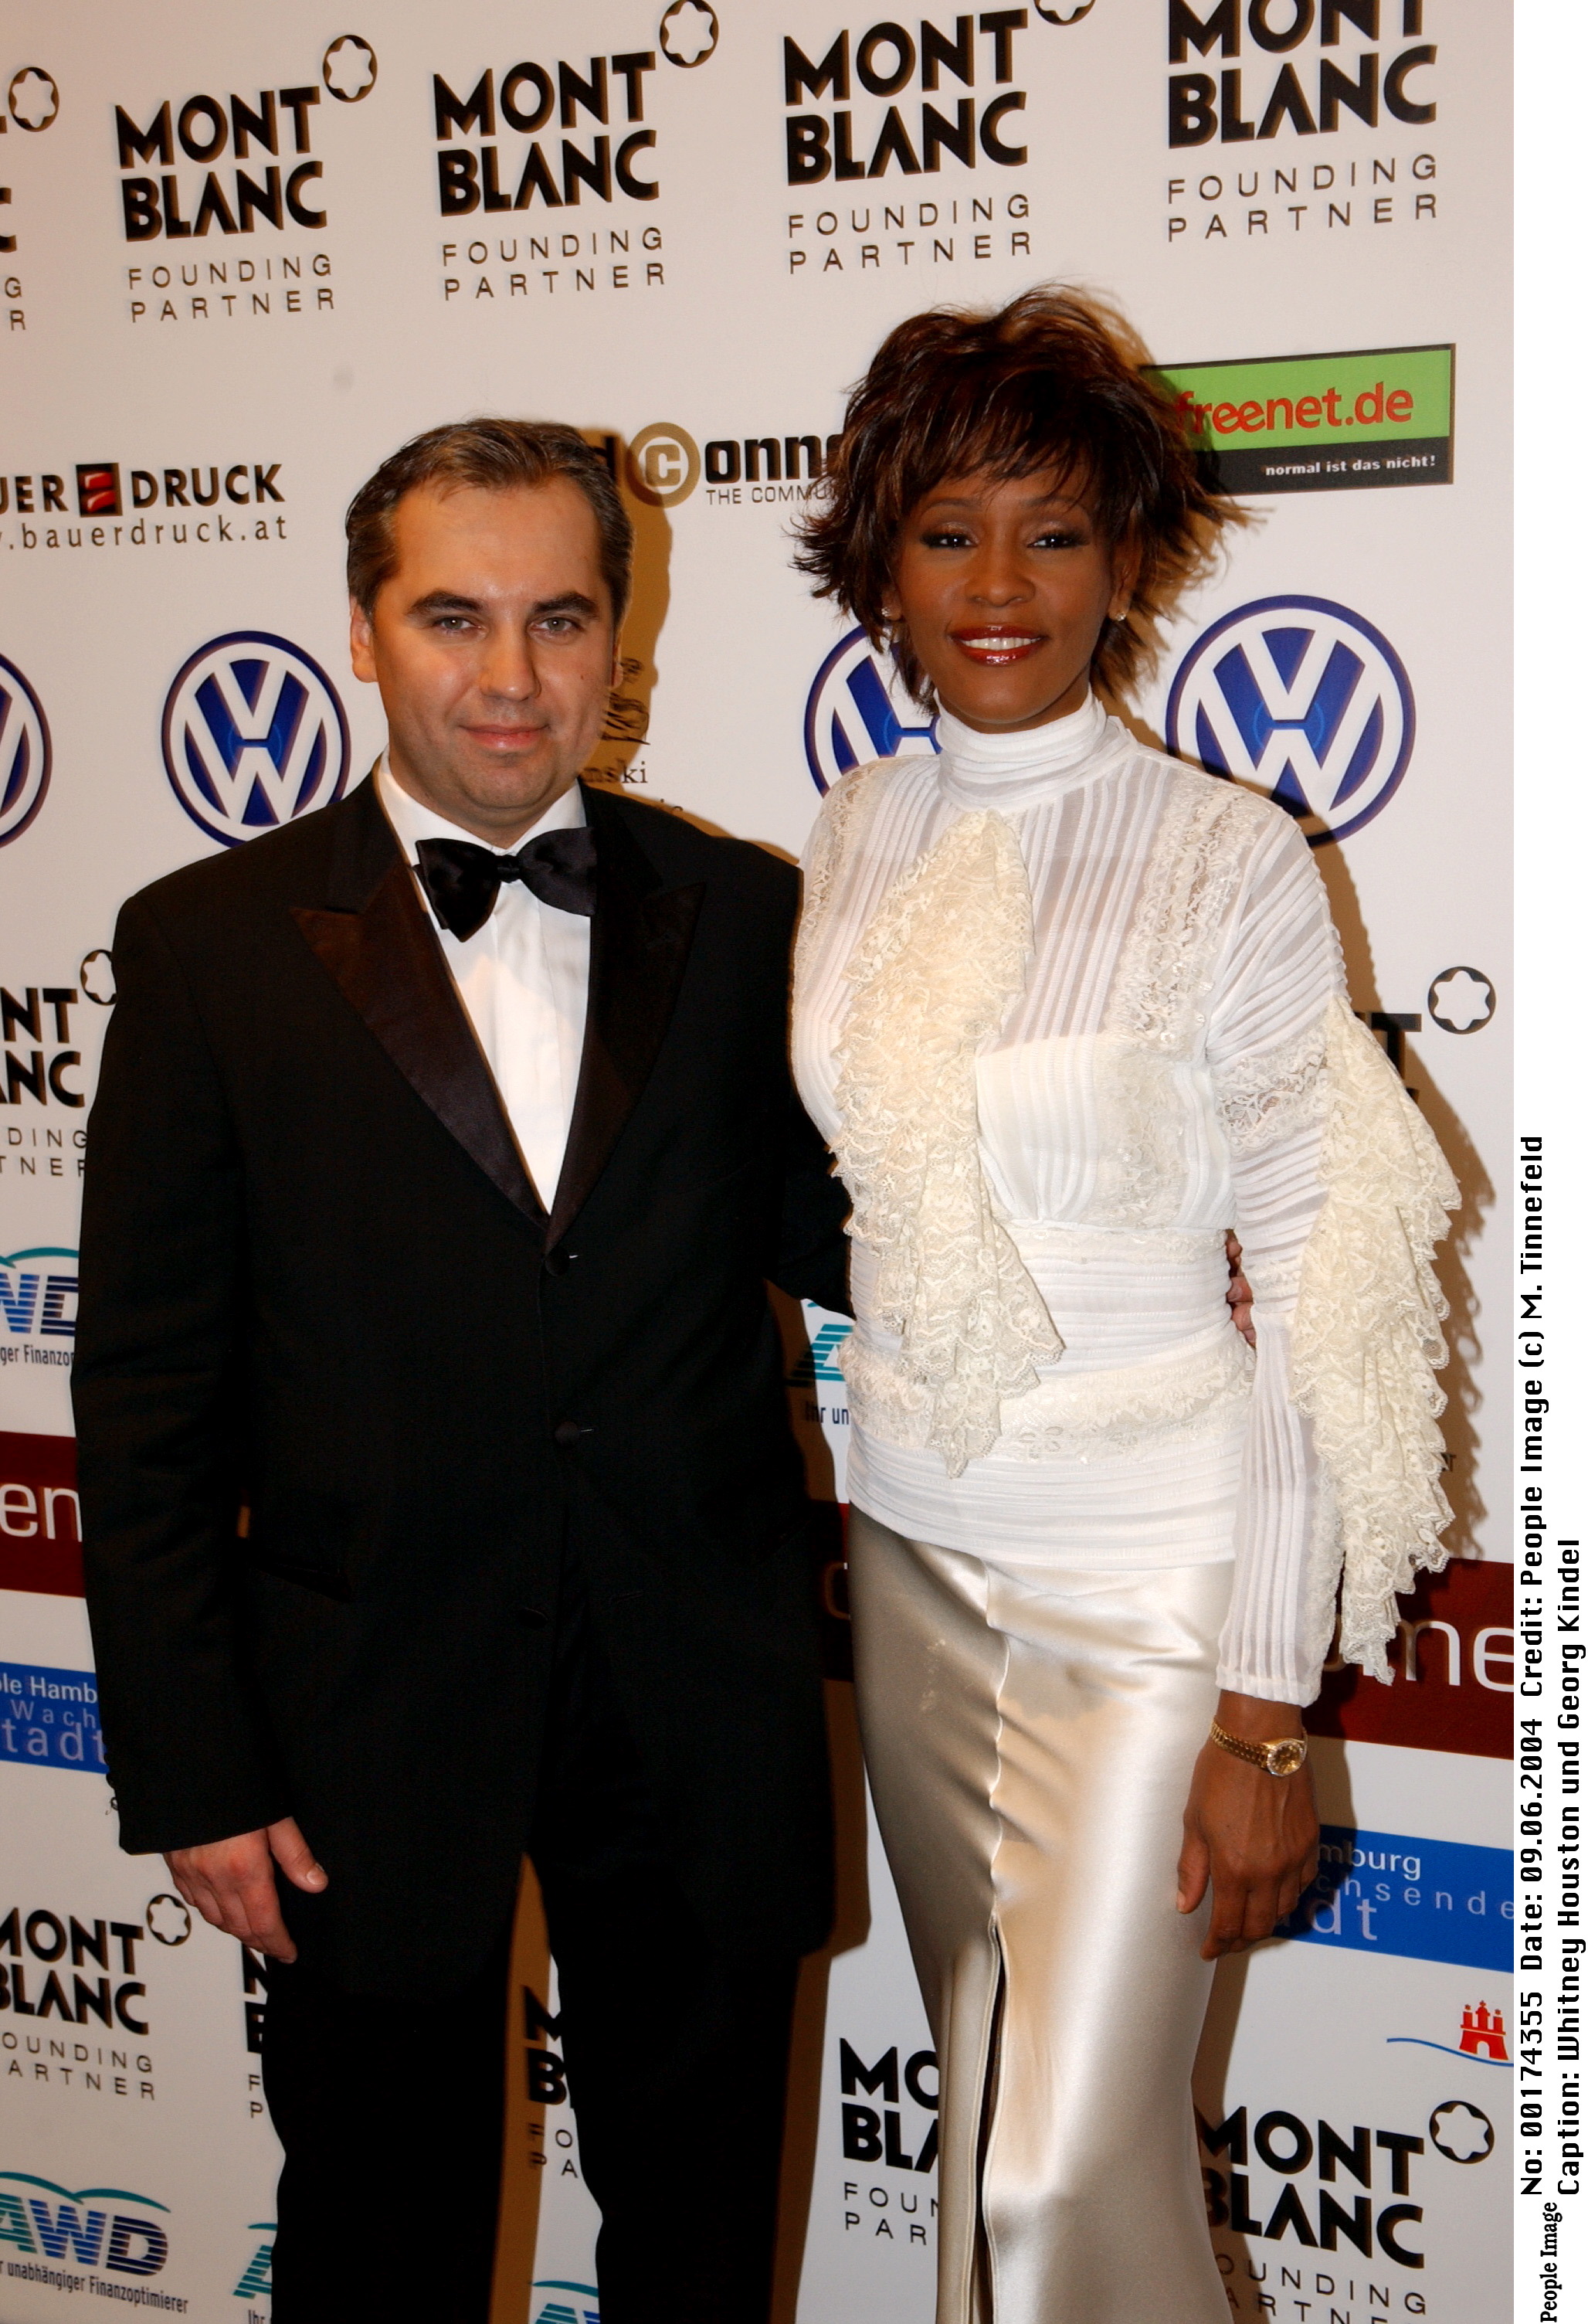 Georg Kindel and Whitney Houston at the WOMEN'S WORLD AWARDS in Hamburg, Germany